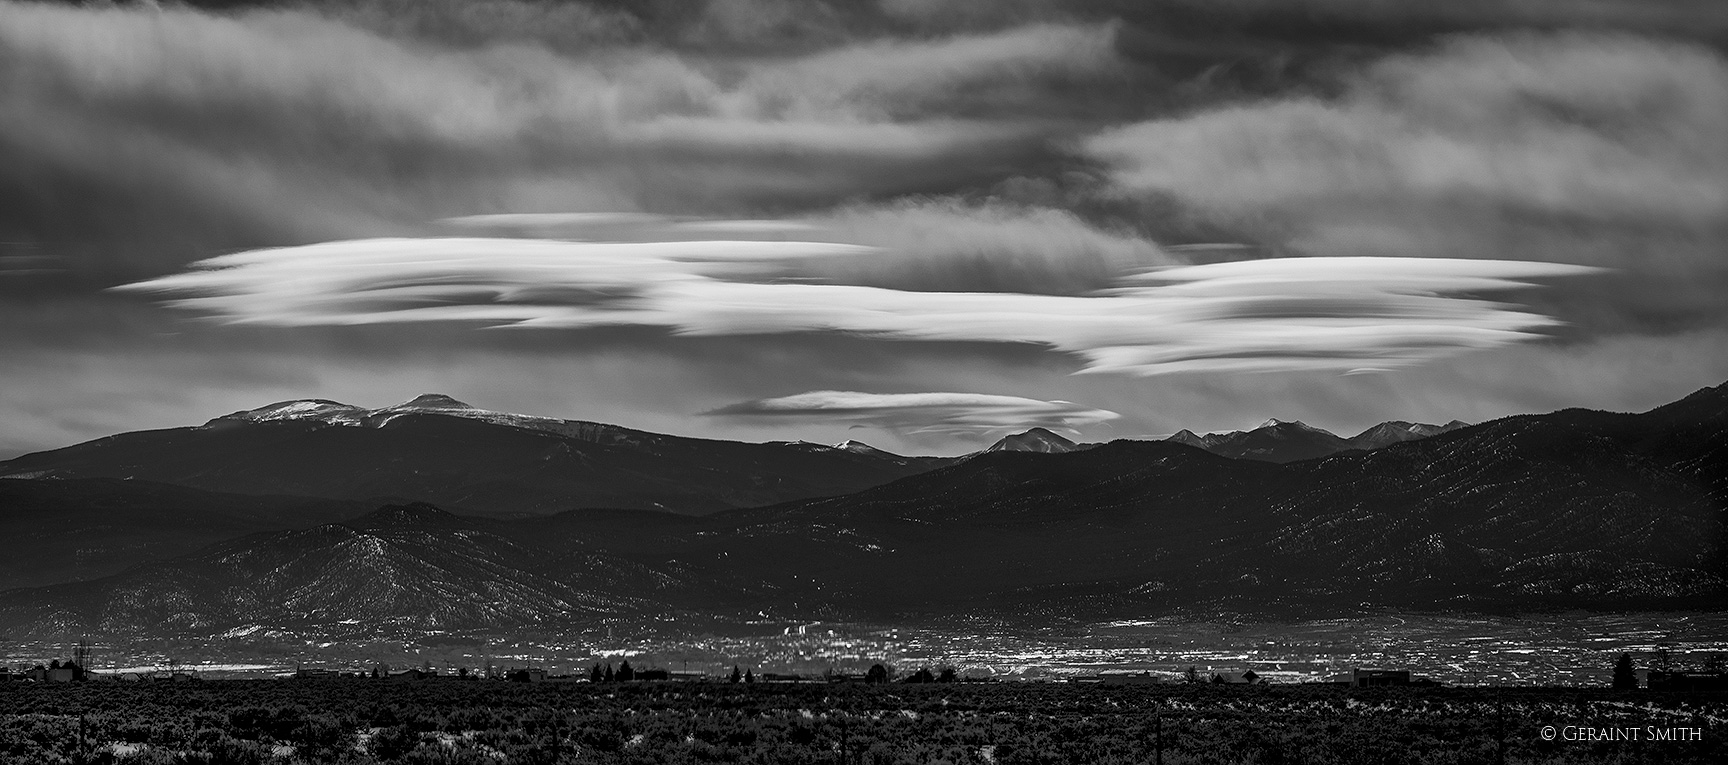 Lenticular clouds, Taos, NM